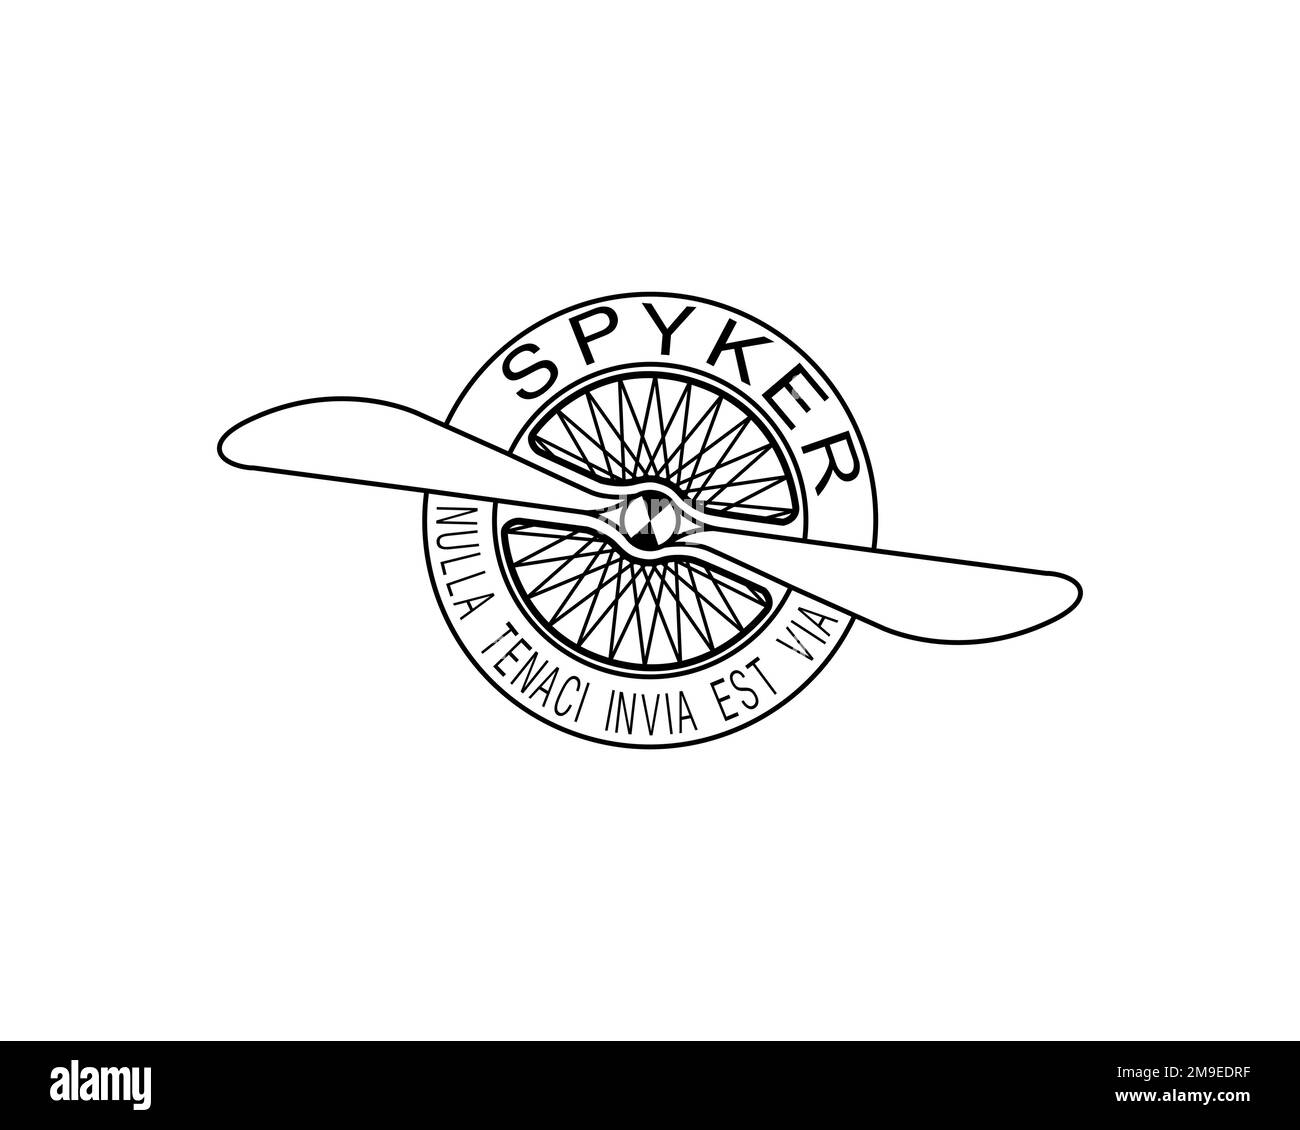 Spyker, Rotated Logo, White Background B Stock Photo - Alamy